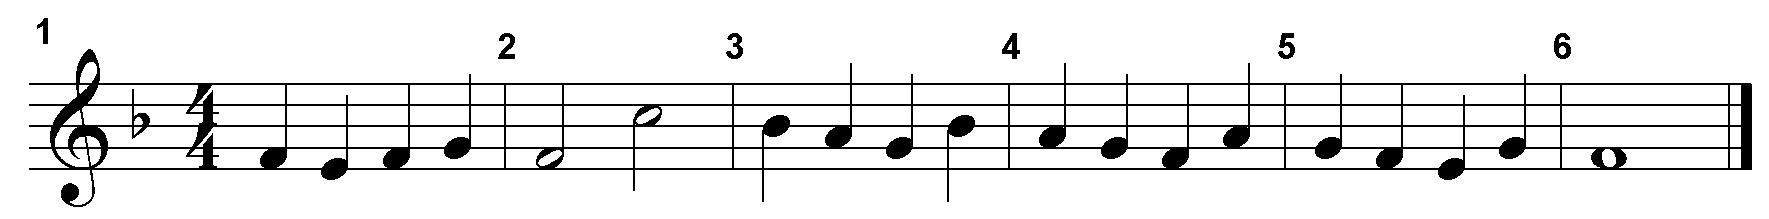 six-measure melody